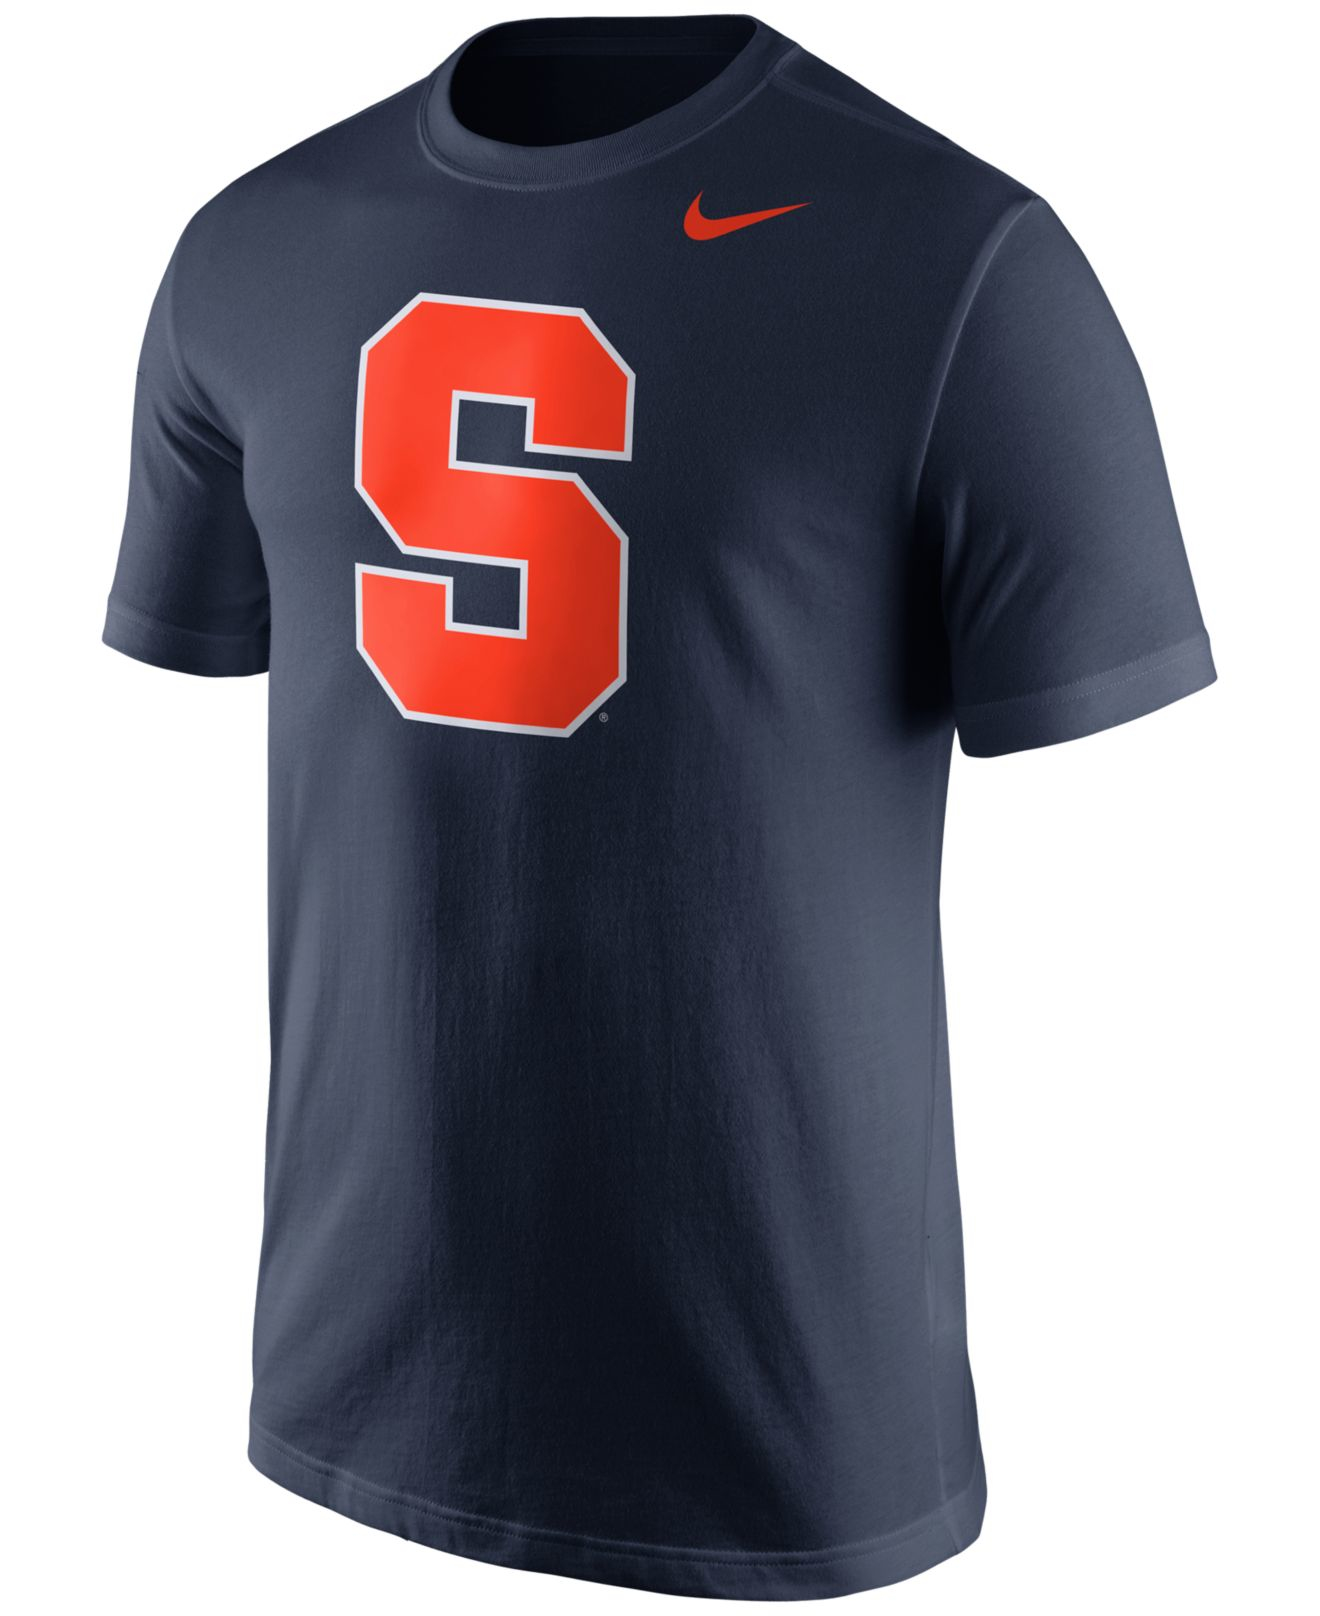 Lyst - Nike Men's Syracuse Orange Logo T-shirt in Blue for Men